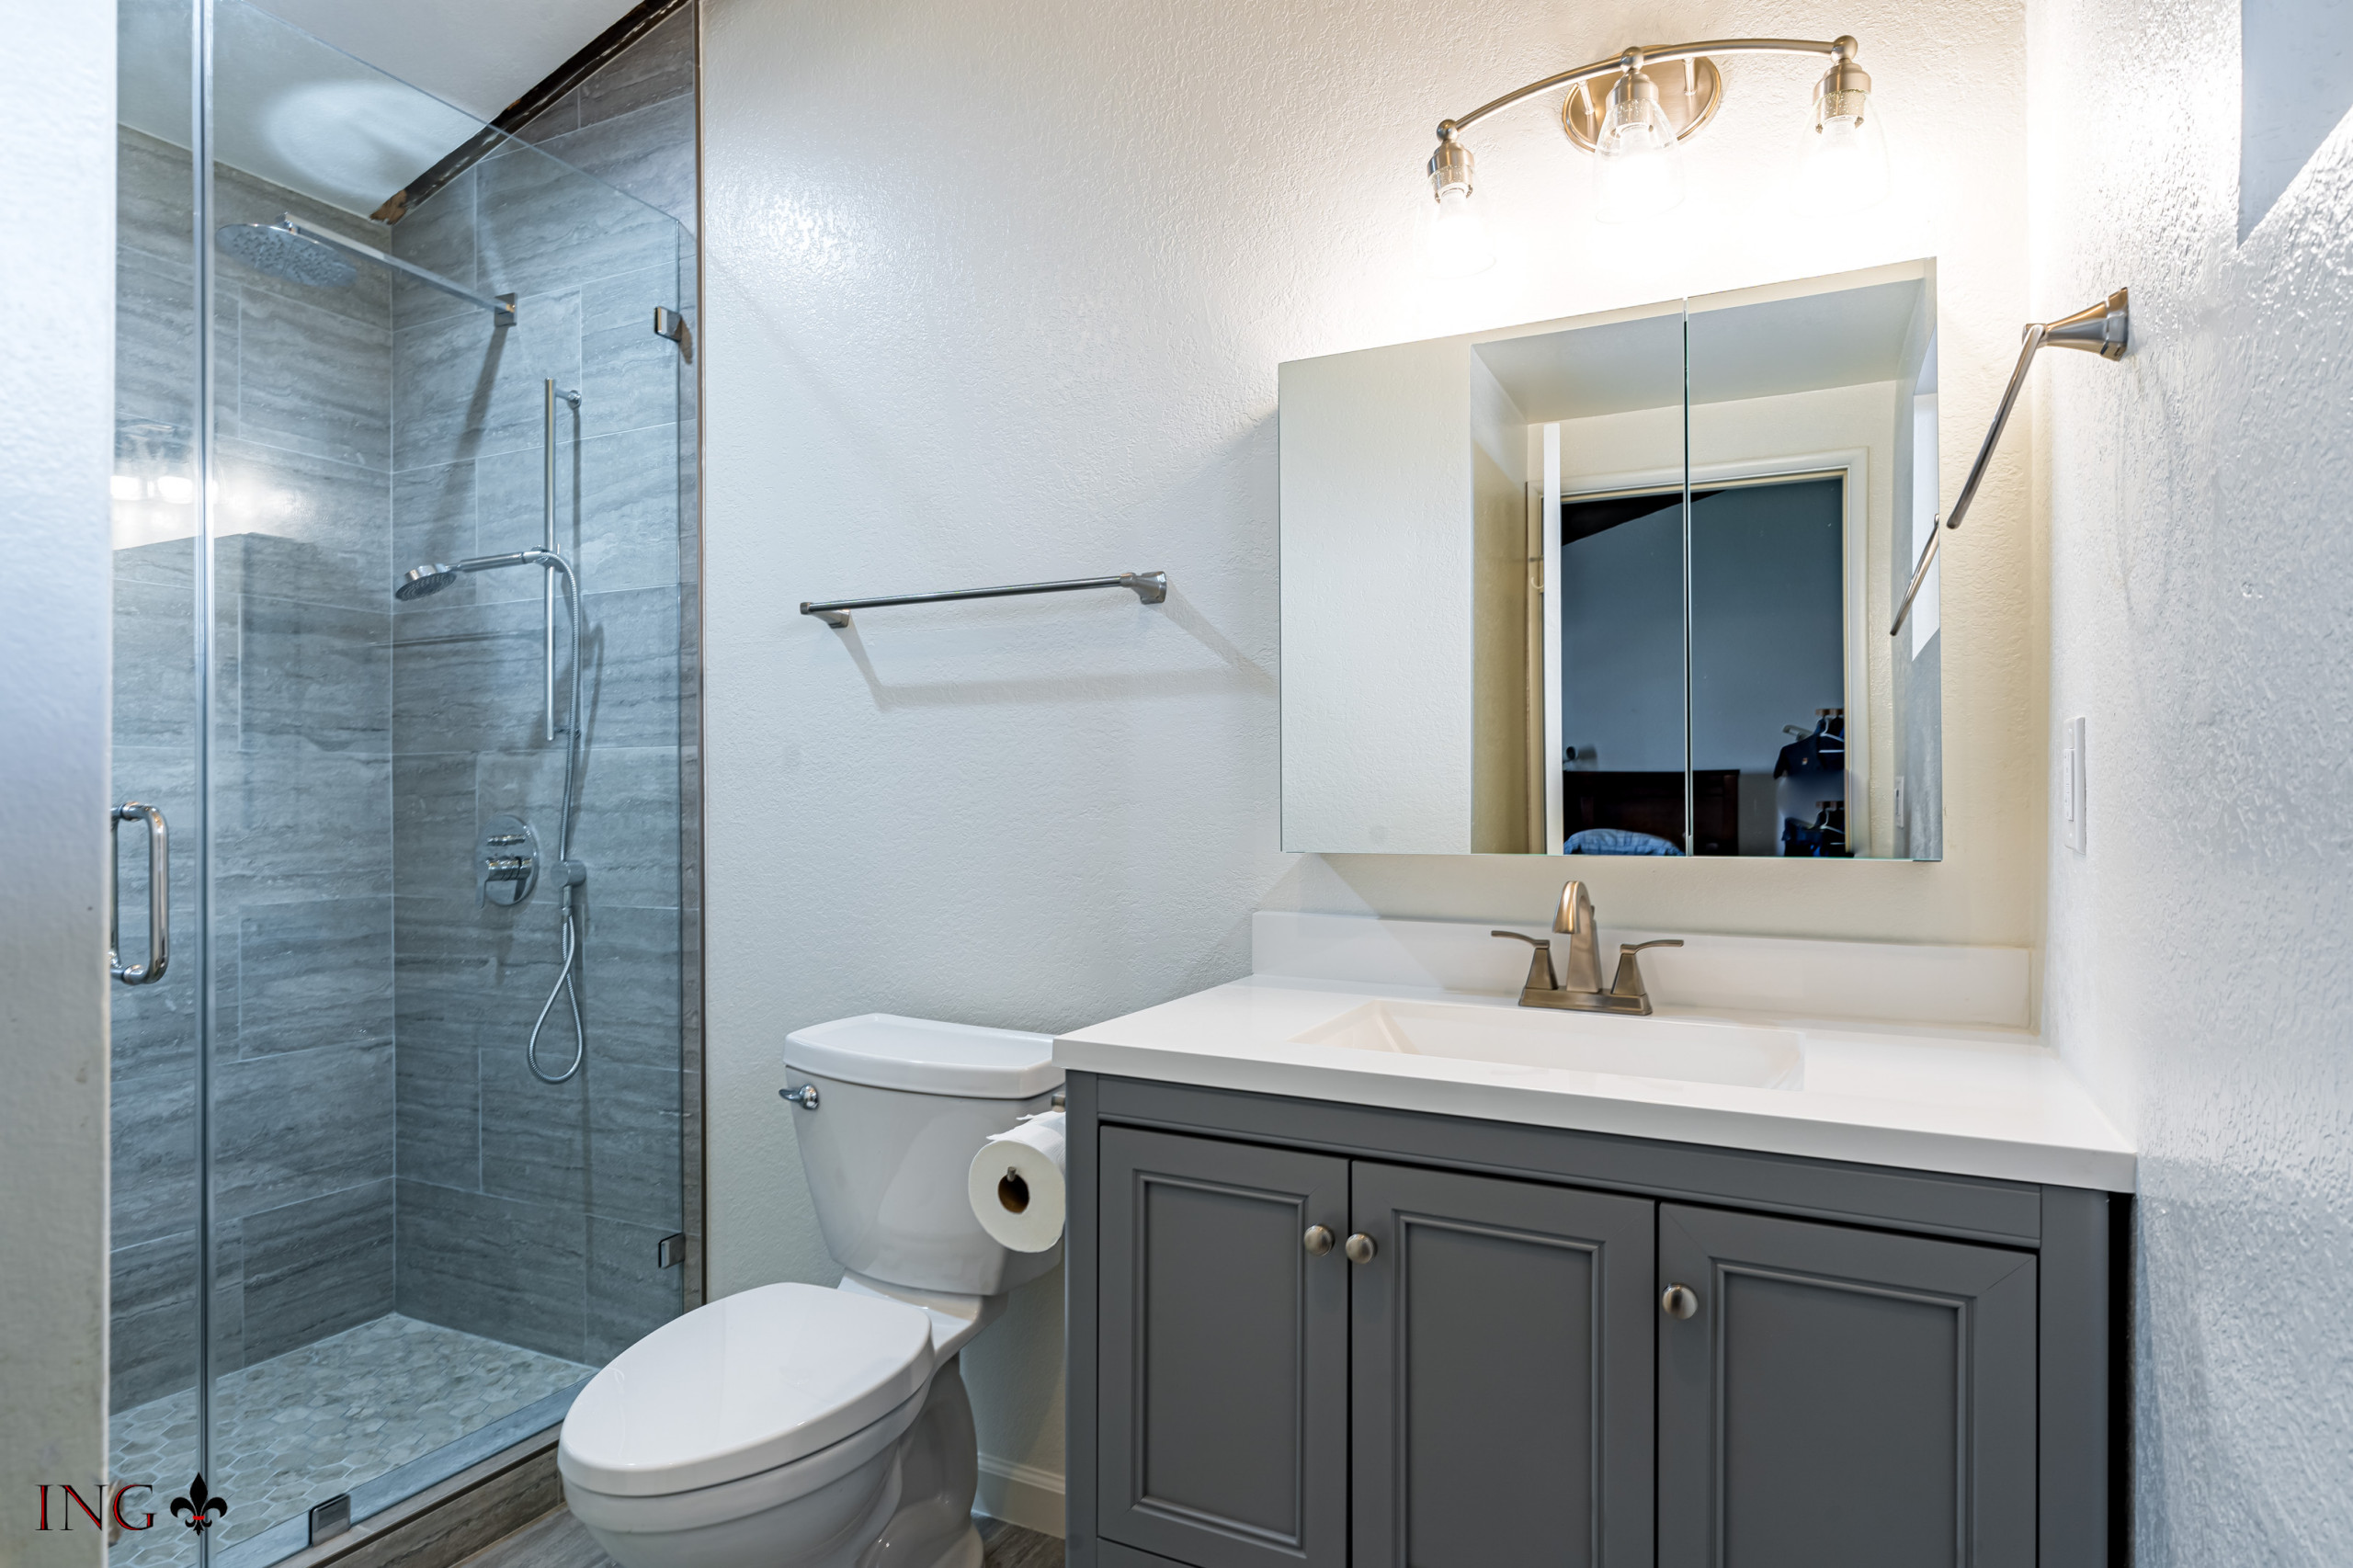 Shower & Floor Tile; Shower Enclosure; Vanity, Mirror & Lighting